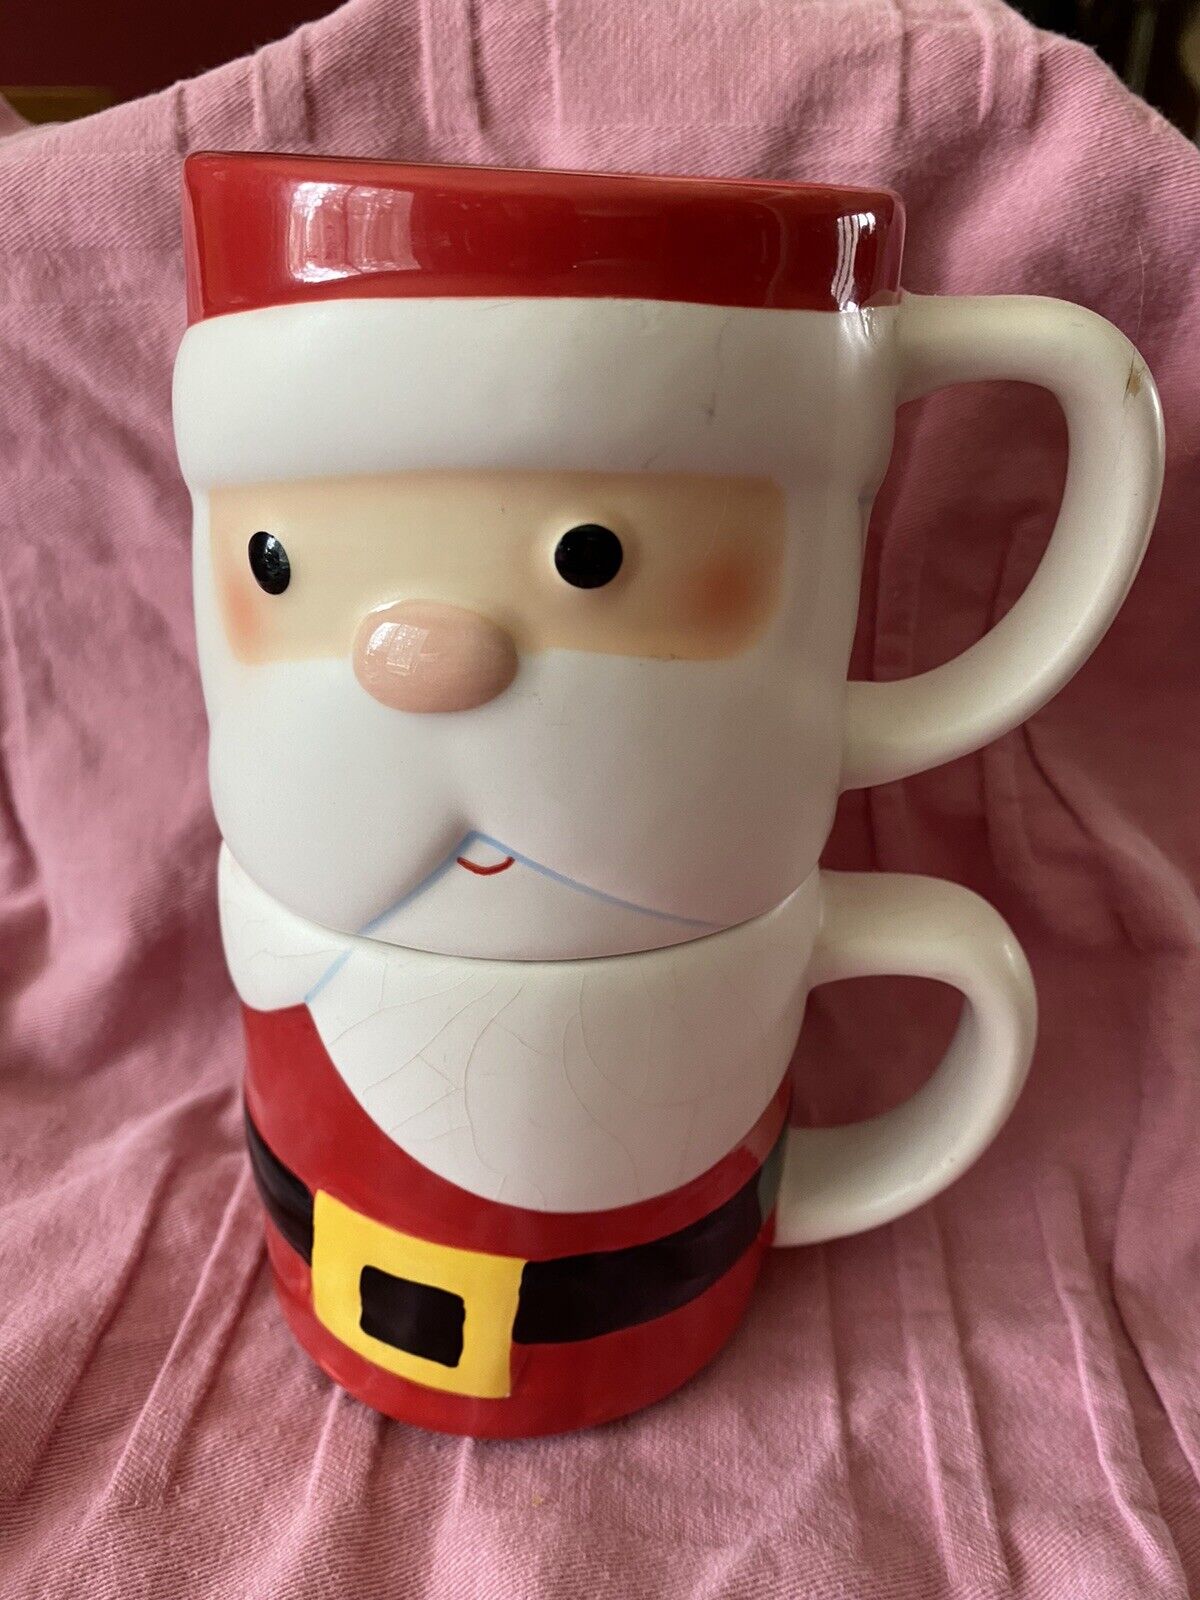 Hallmark Stacking Santa Claus Mug Set - Only Gently Used For Display